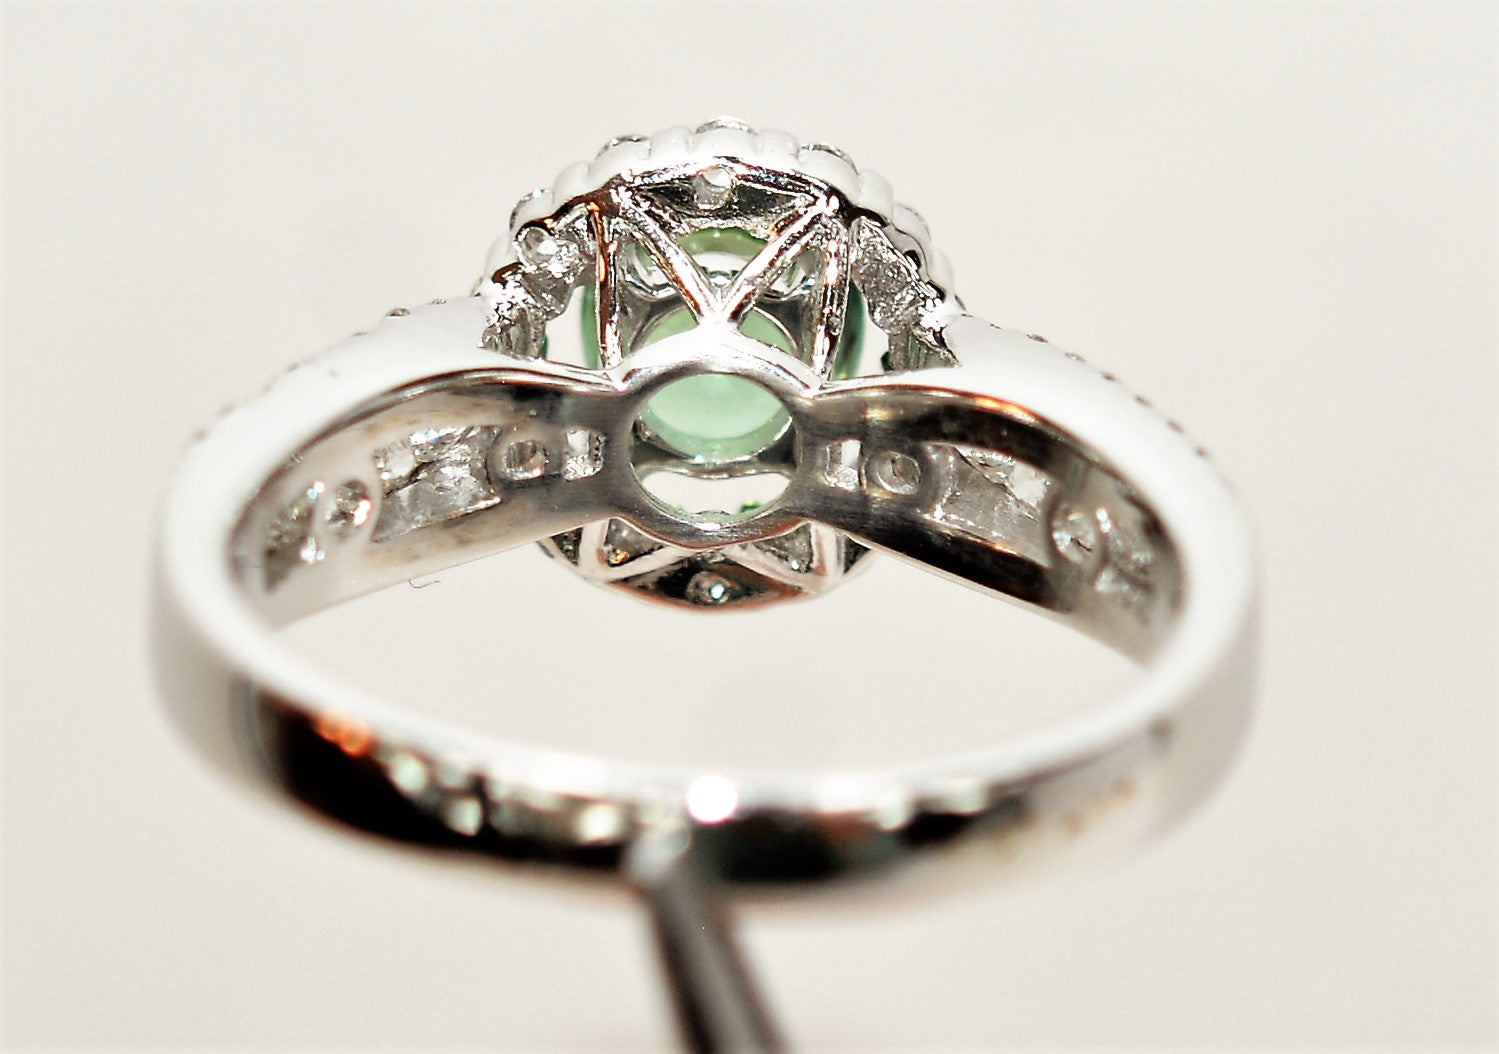 Natural Paraiba Tourmaline & Diamond Ring 18K Solid White Gold 1.37tcw Engagement Ring Fine Bridal Promise Ring Cocktail Ring Statement Ring